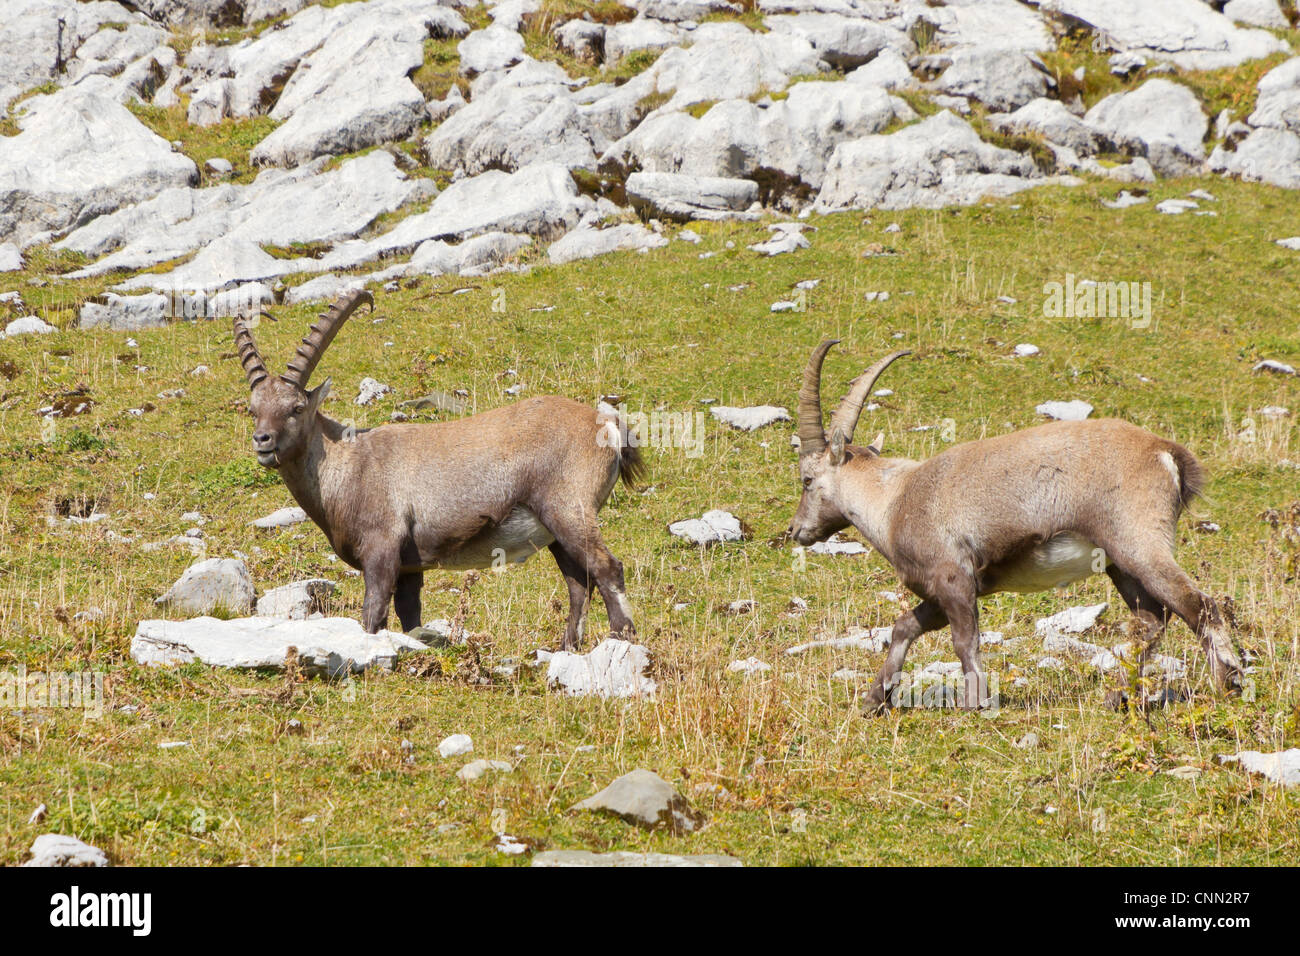 group of alpine ibex (Capra ibex) a wild goat species grazing on a rocky maedow in Switzerland Stock Photo